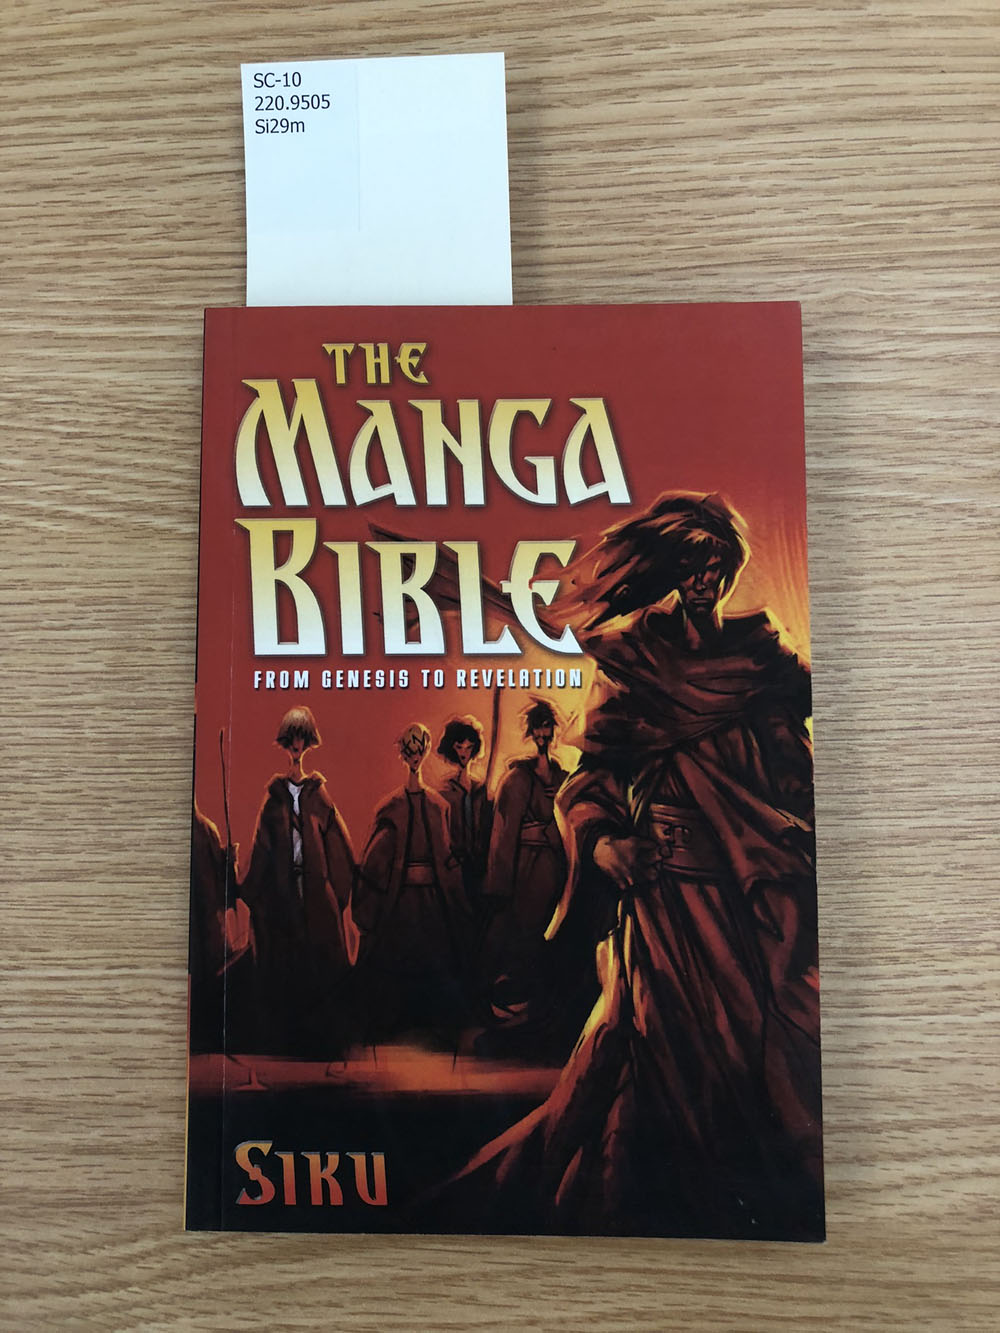 The Manga Bible from Genesis to Revelation, 2007